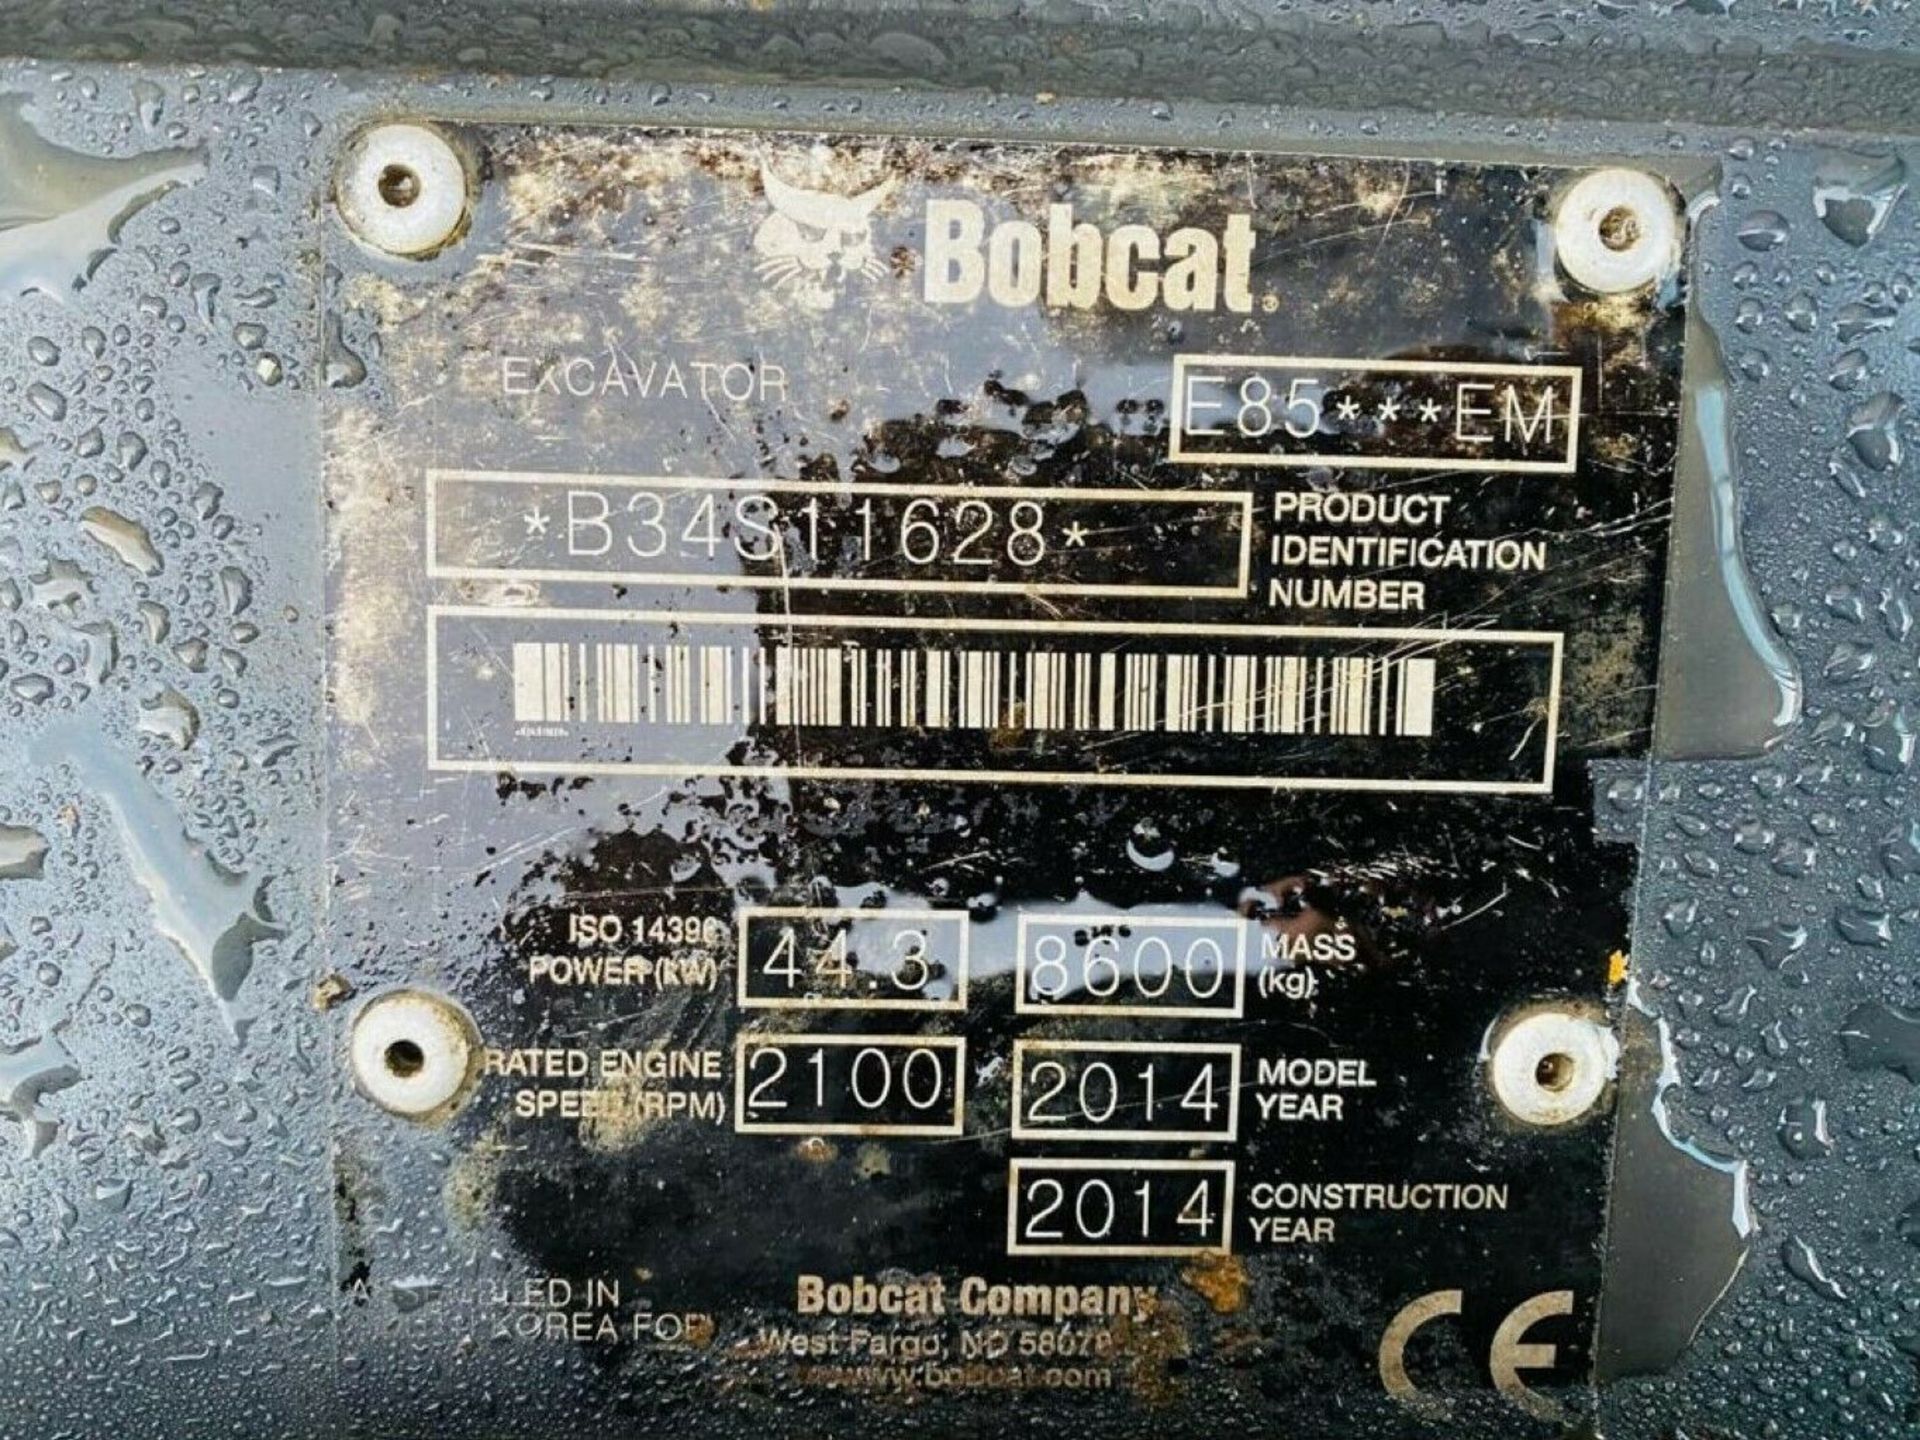 Bobcat E85 Excavator 2014 - Image 12 of 12